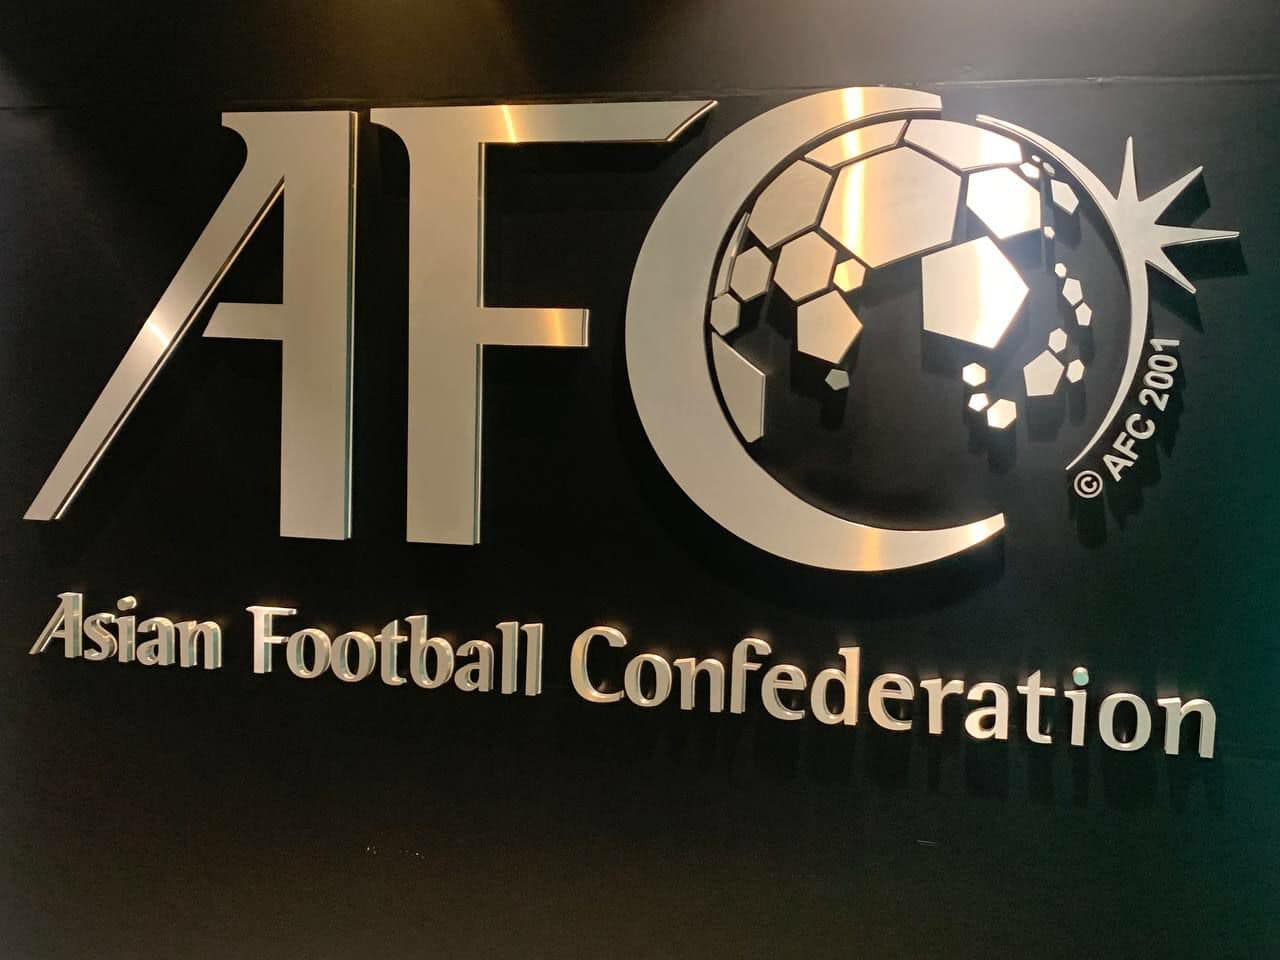 Visit to Asian Football Confederation